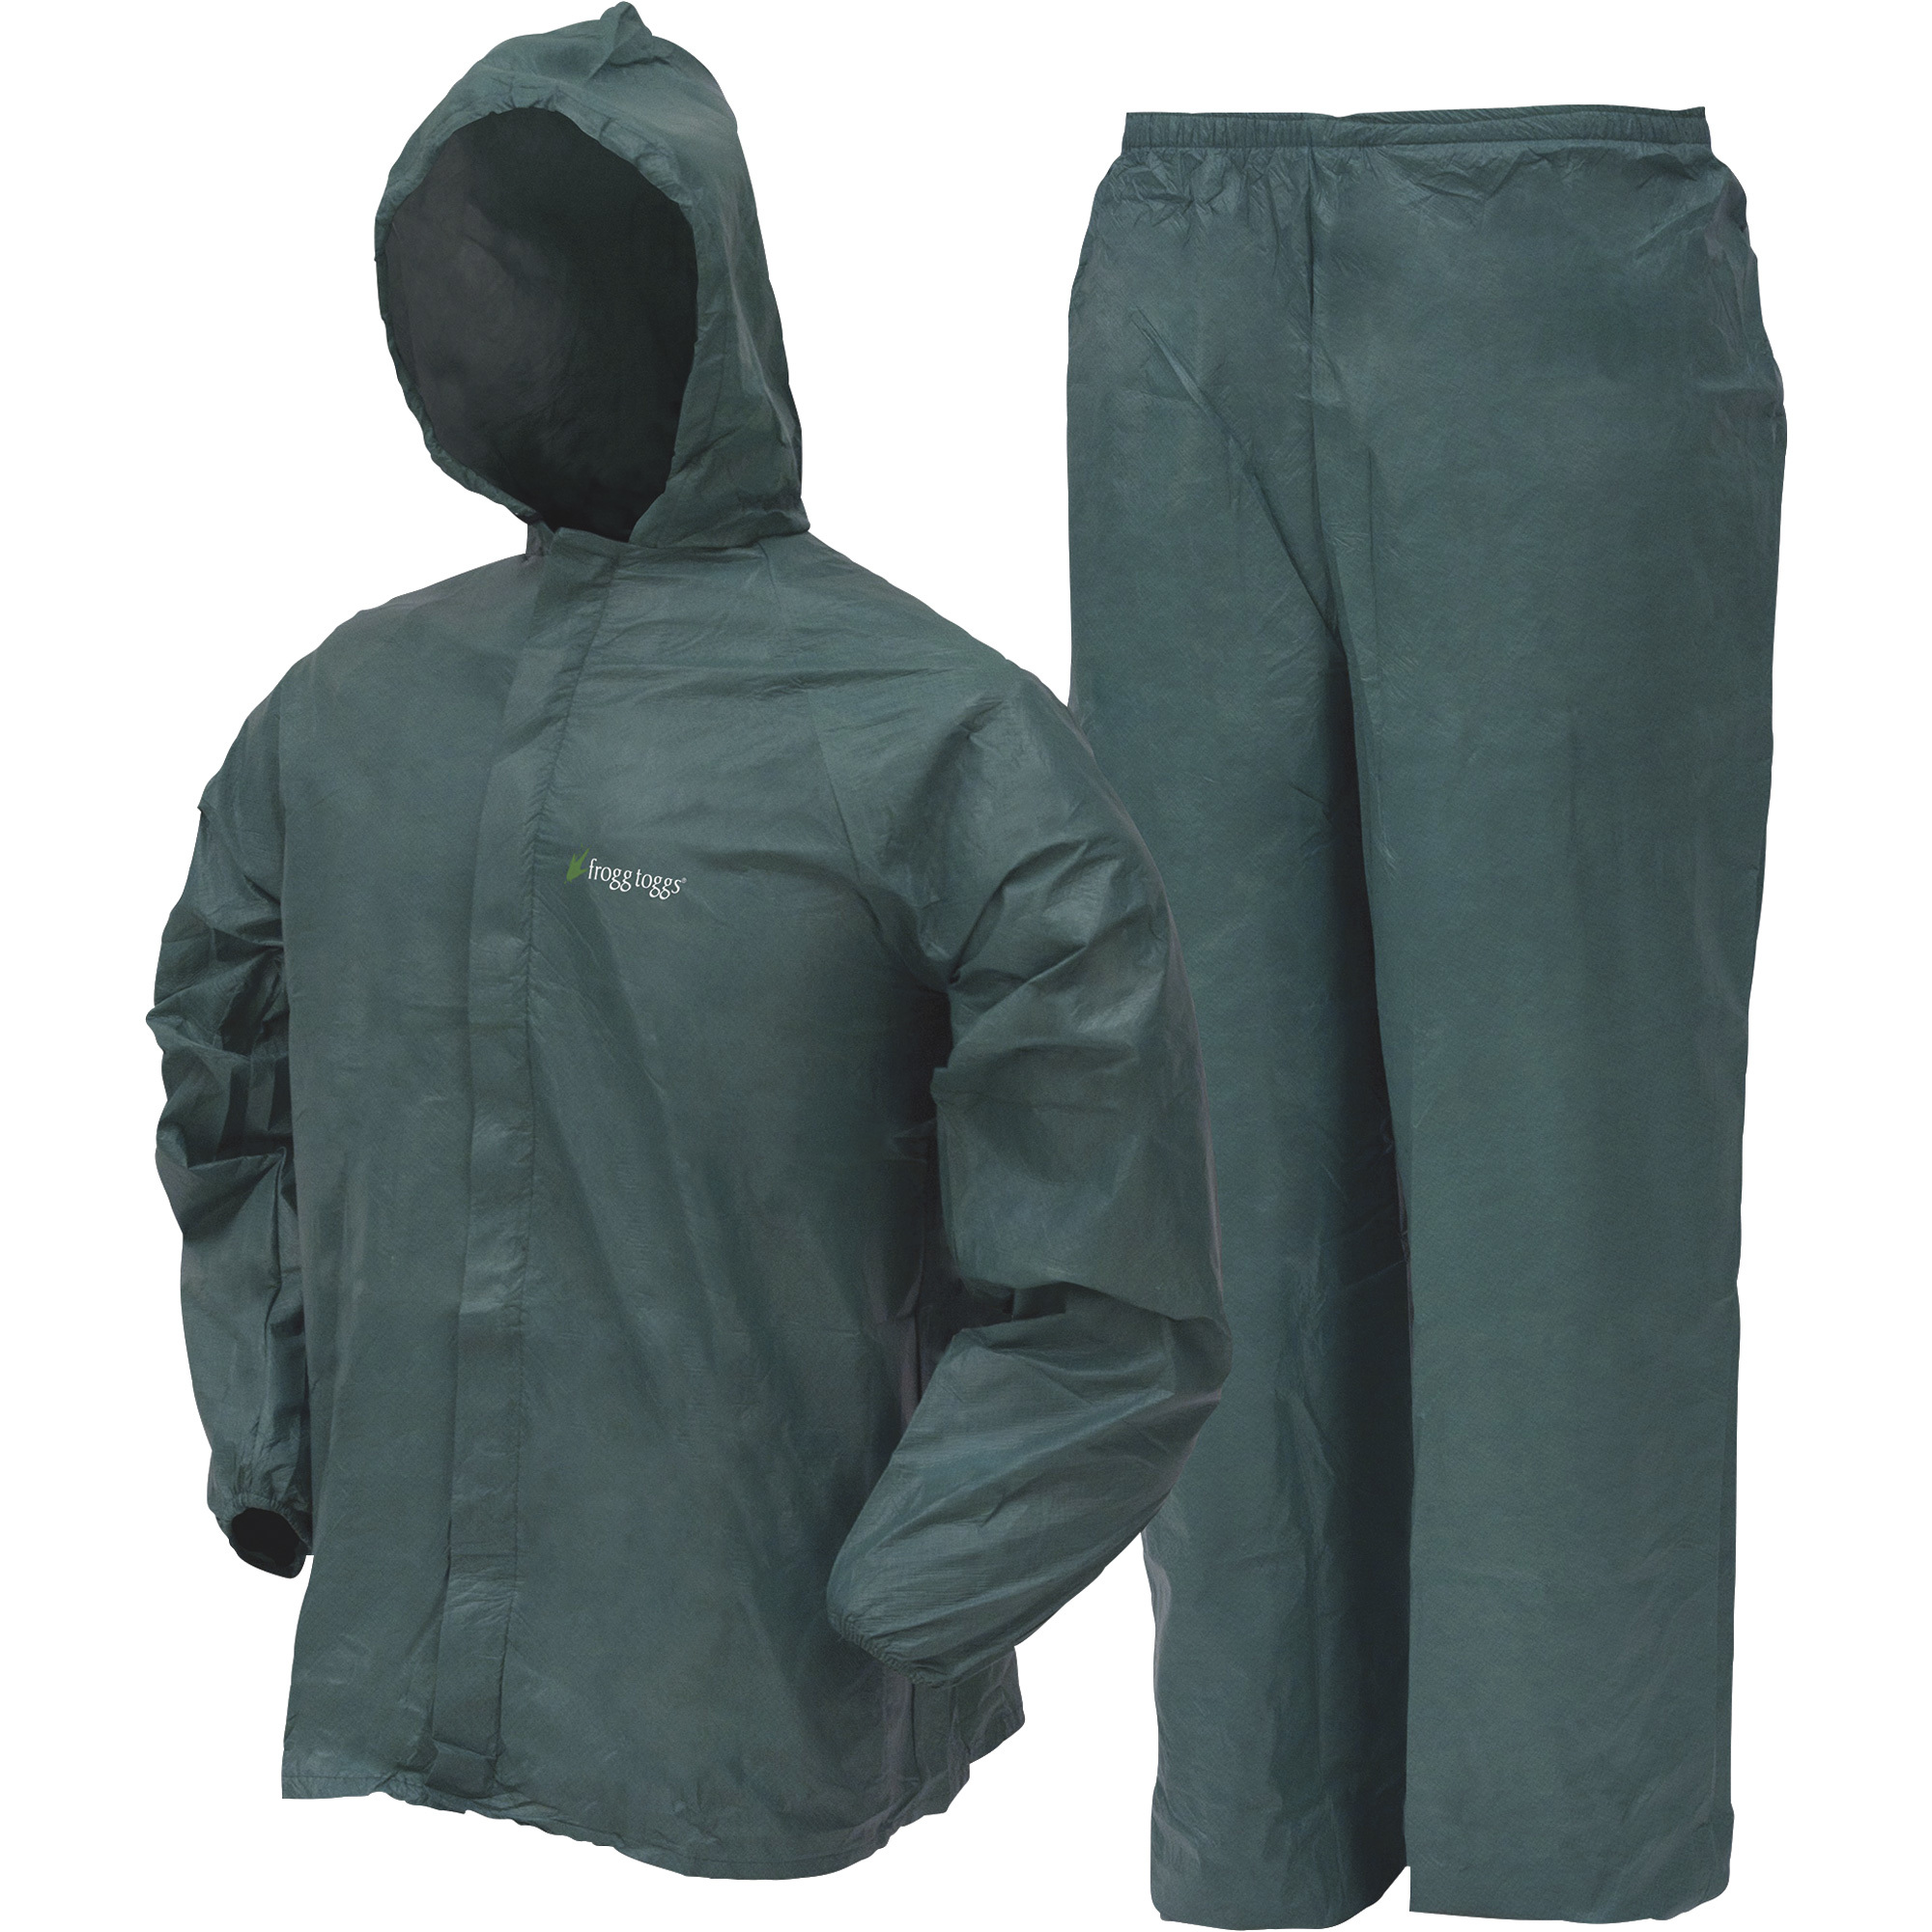 Frogg Toggs Men's Ultra-Lite 2 Jacket and Pants Rain Suit â Green, 2XL, Model UL12104-092XL